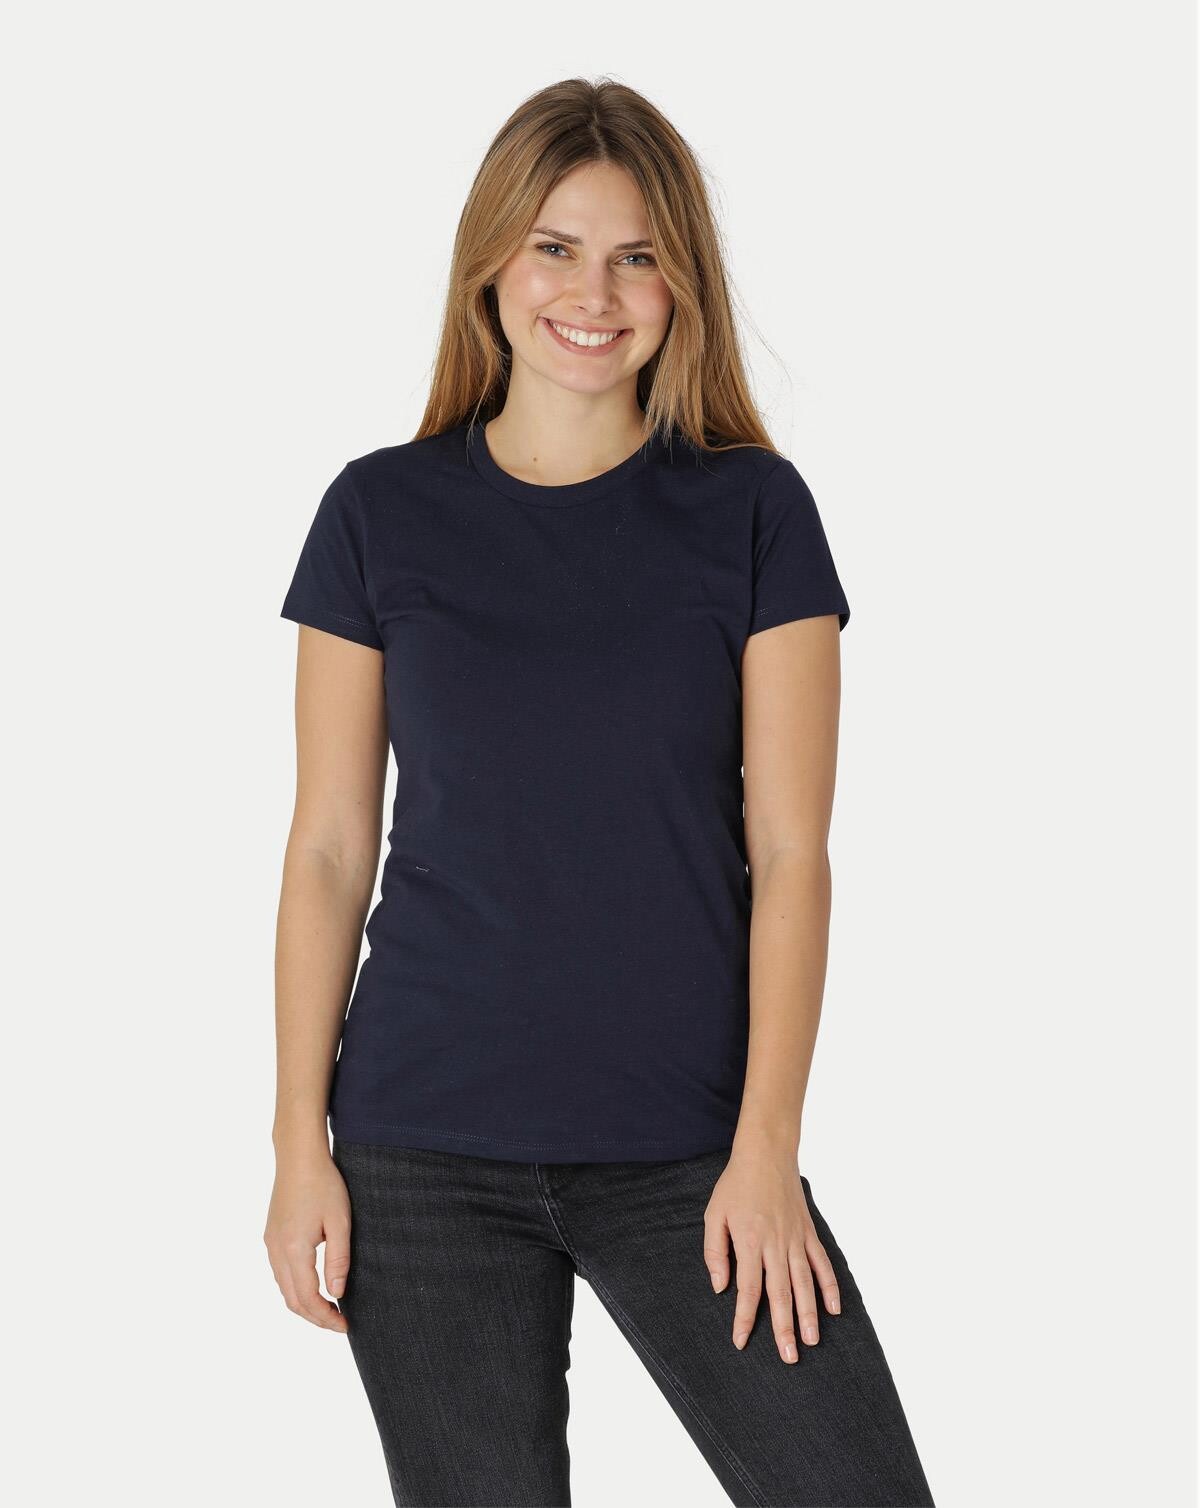 Neutral Økologisk Dame Tætsiddende T-Shirt (Navy, M)